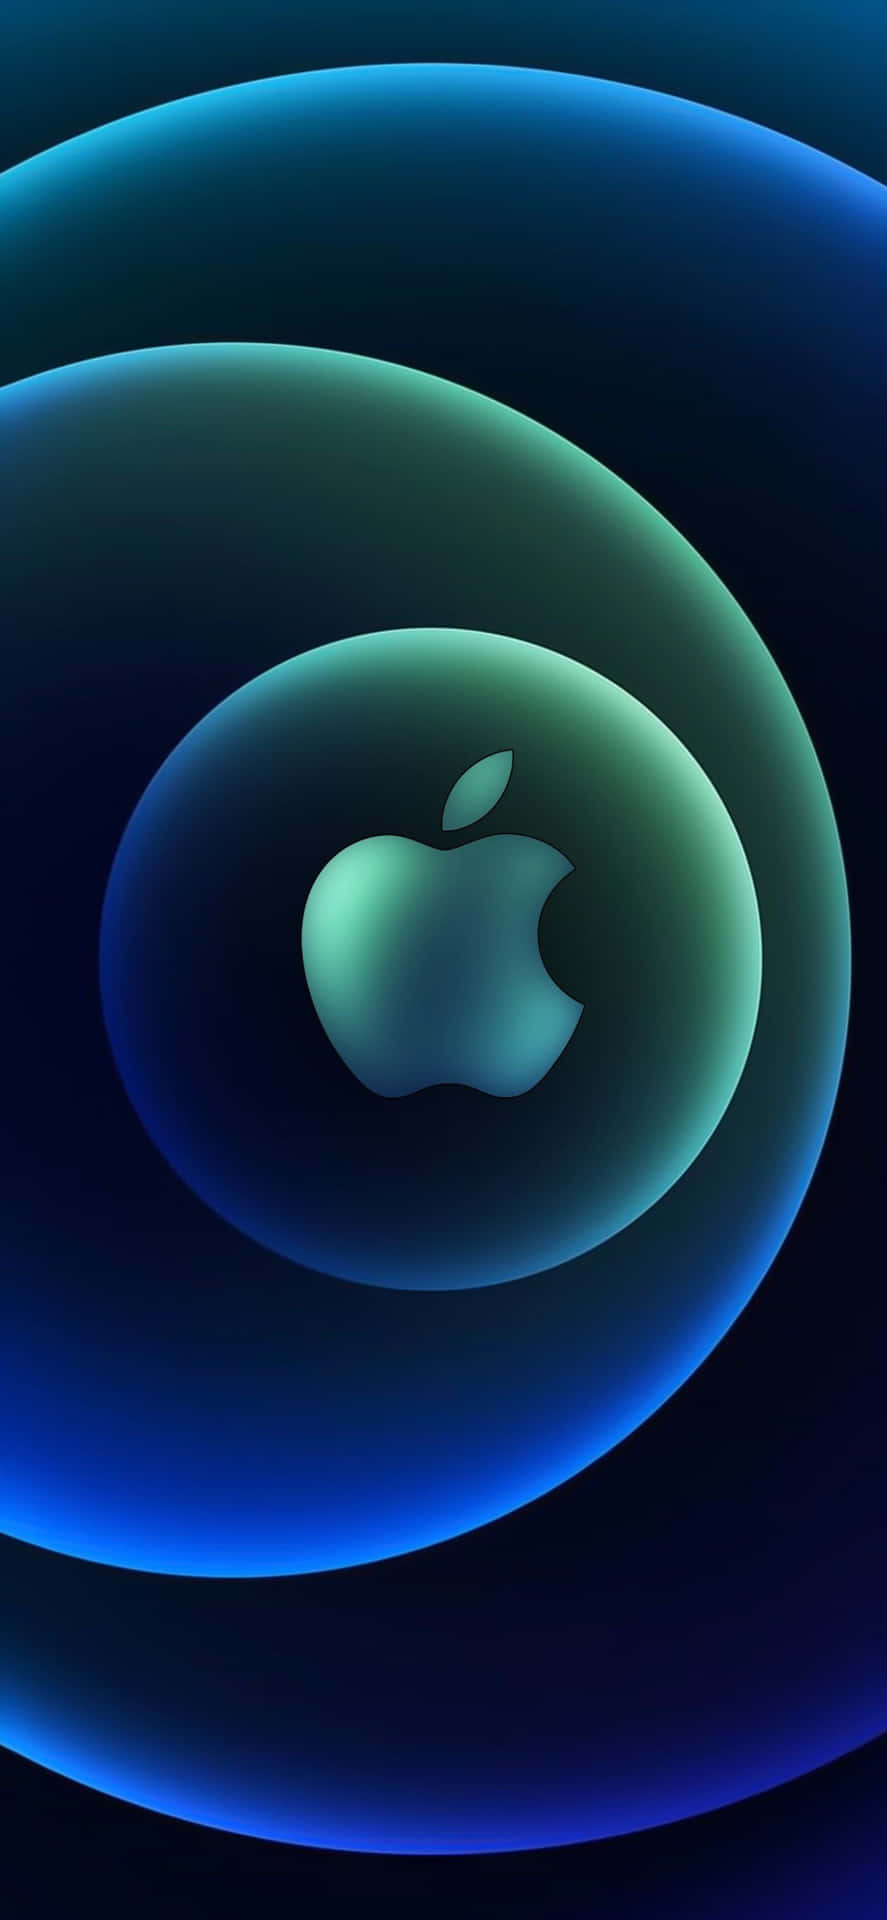 Apple Logo On A Blue Background